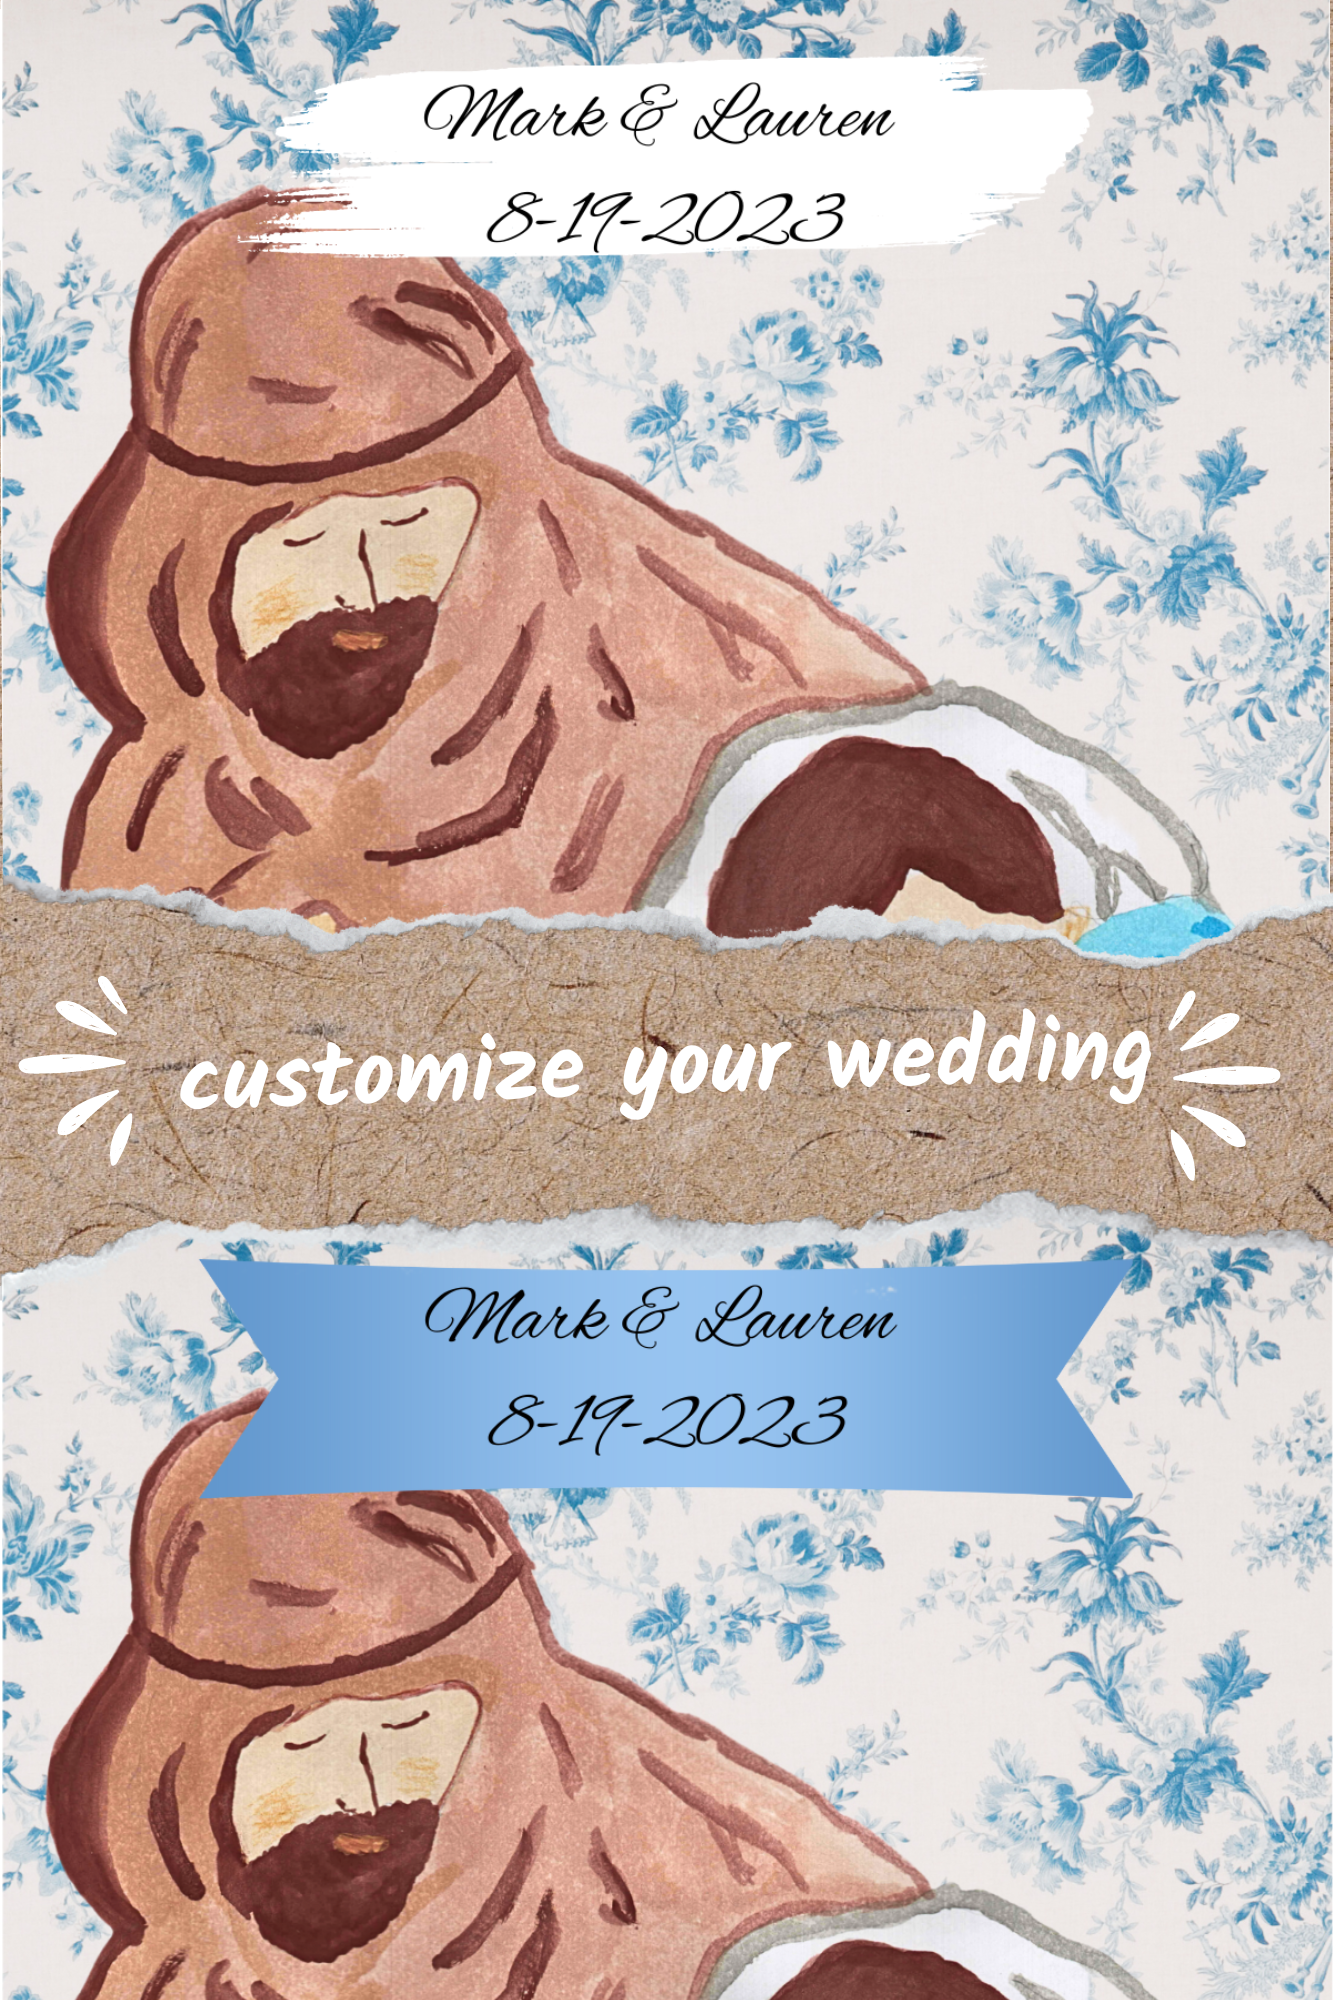 Custom wedding favors - wedding cards